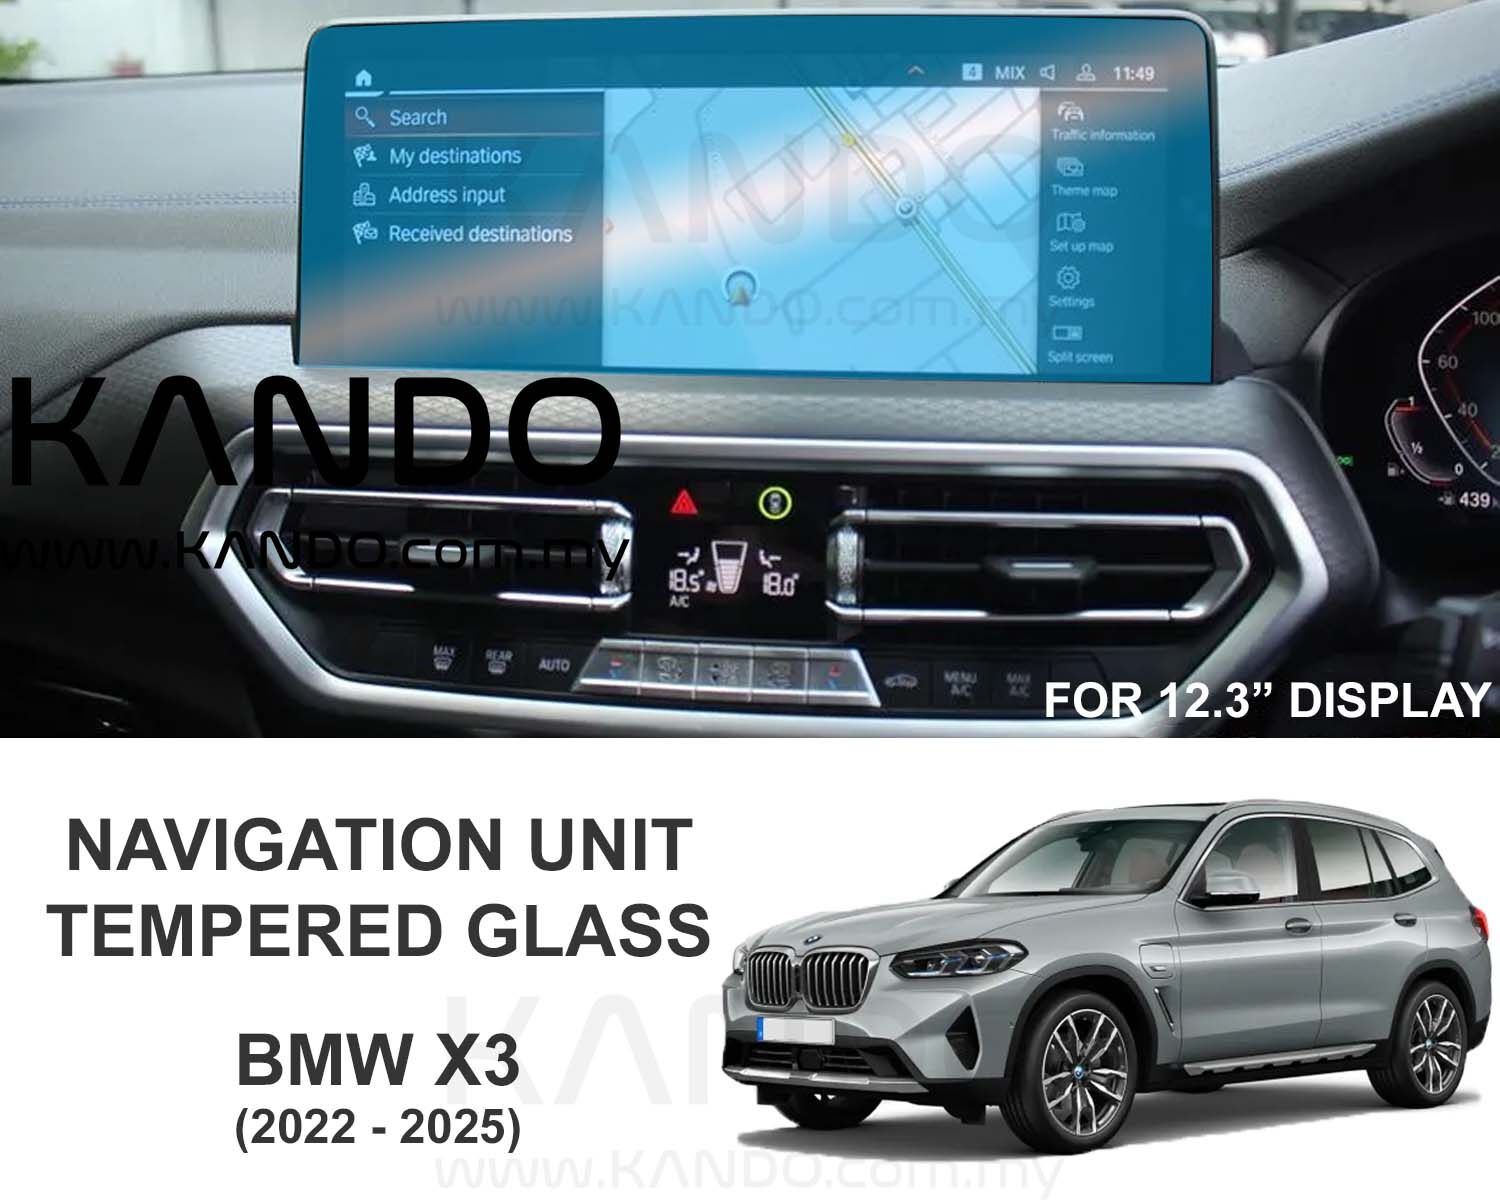 BMW X3 Tempered Glass Protector BMW G01 X3 LCI Tempered Glass Protector BMW G01 X3 Tempered Glass Protector BMW X3 Screen Protector